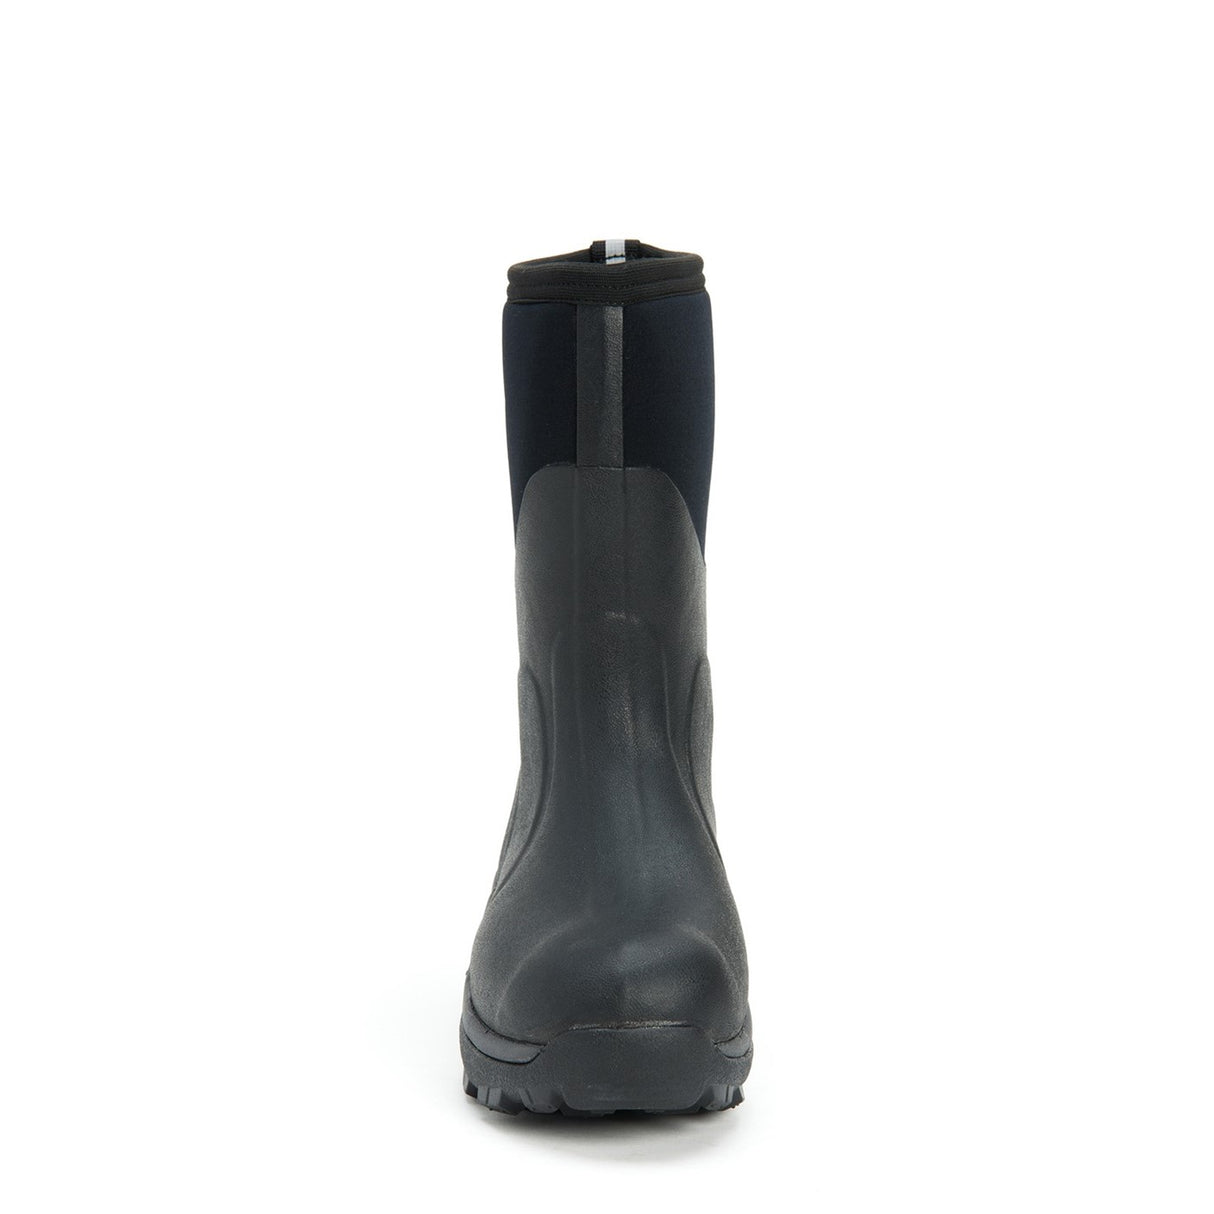 Unisex Arctic Sport Short Boots Black